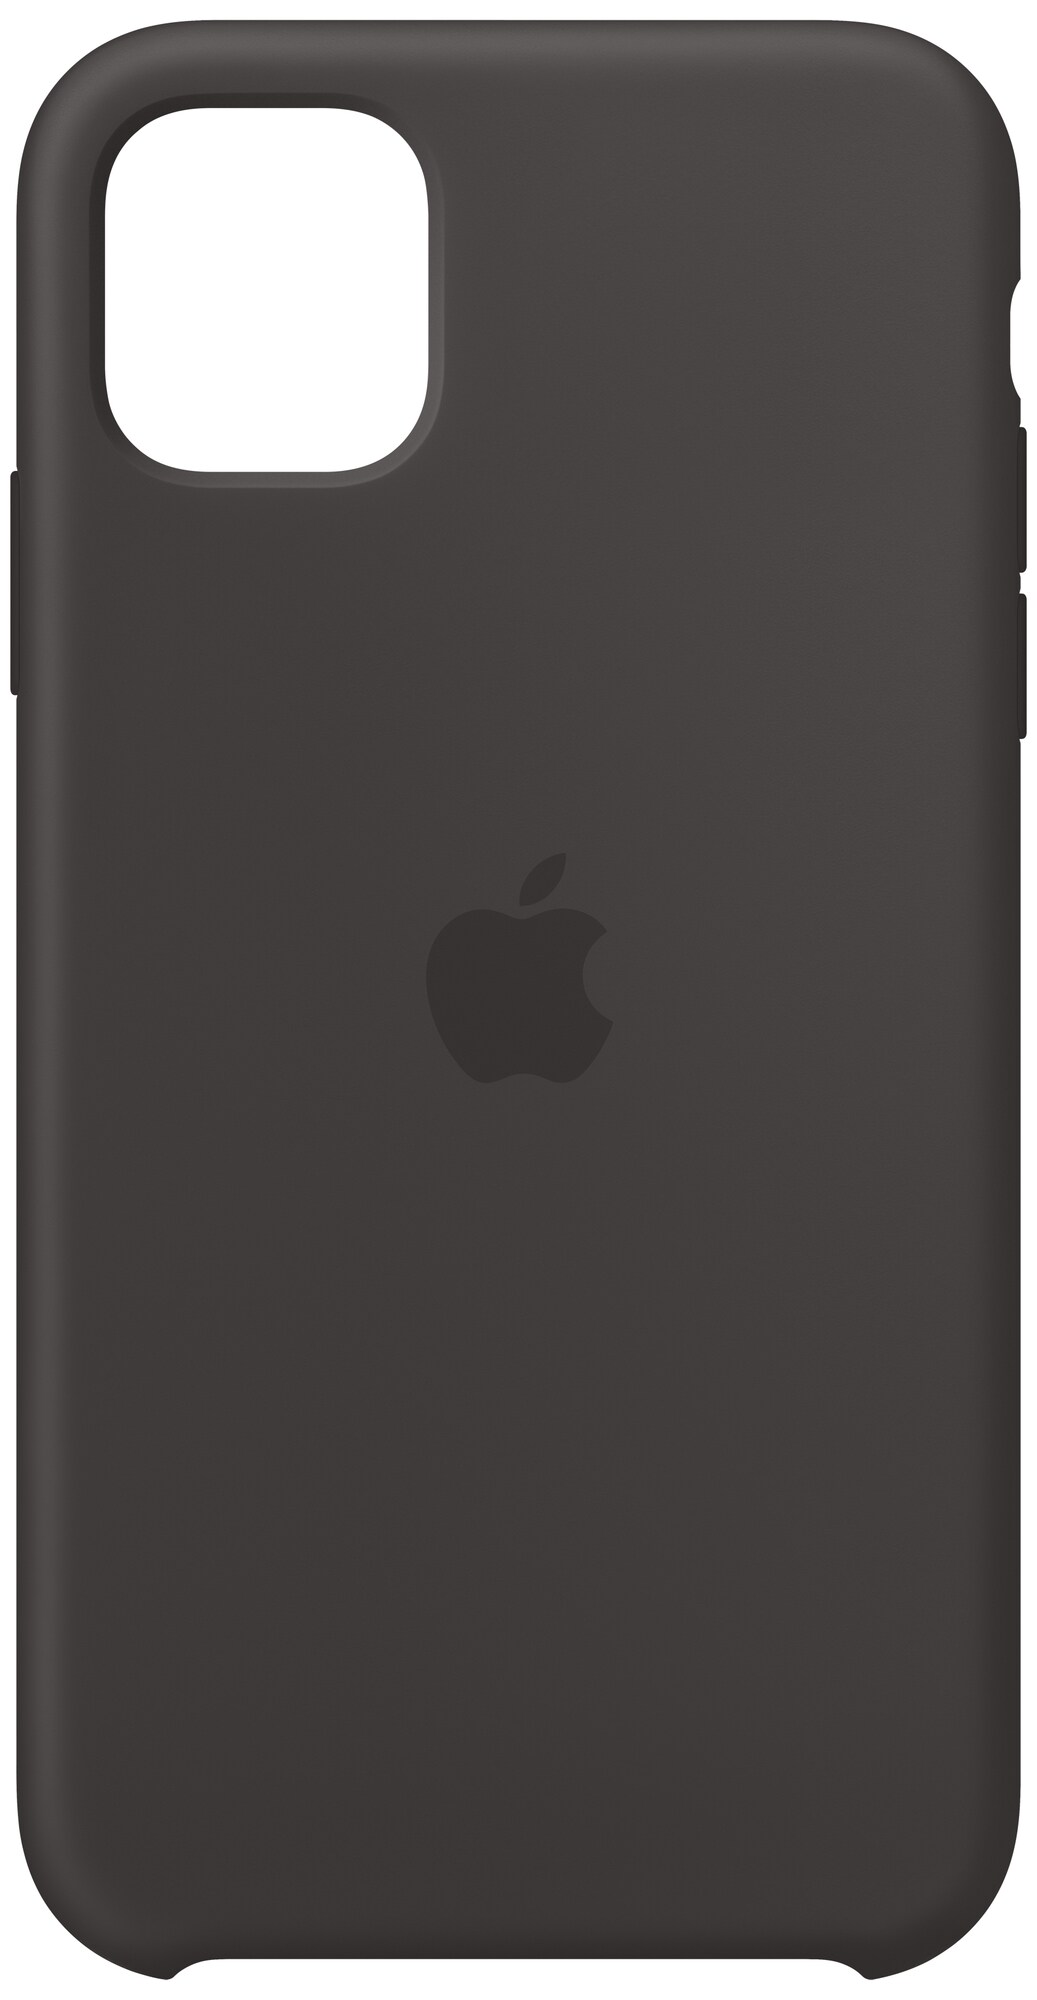 Geologi Link Jo da iPhone 11 silikondeksel (sort) - Deksler og etui til mobiltelefon - Elkjøp